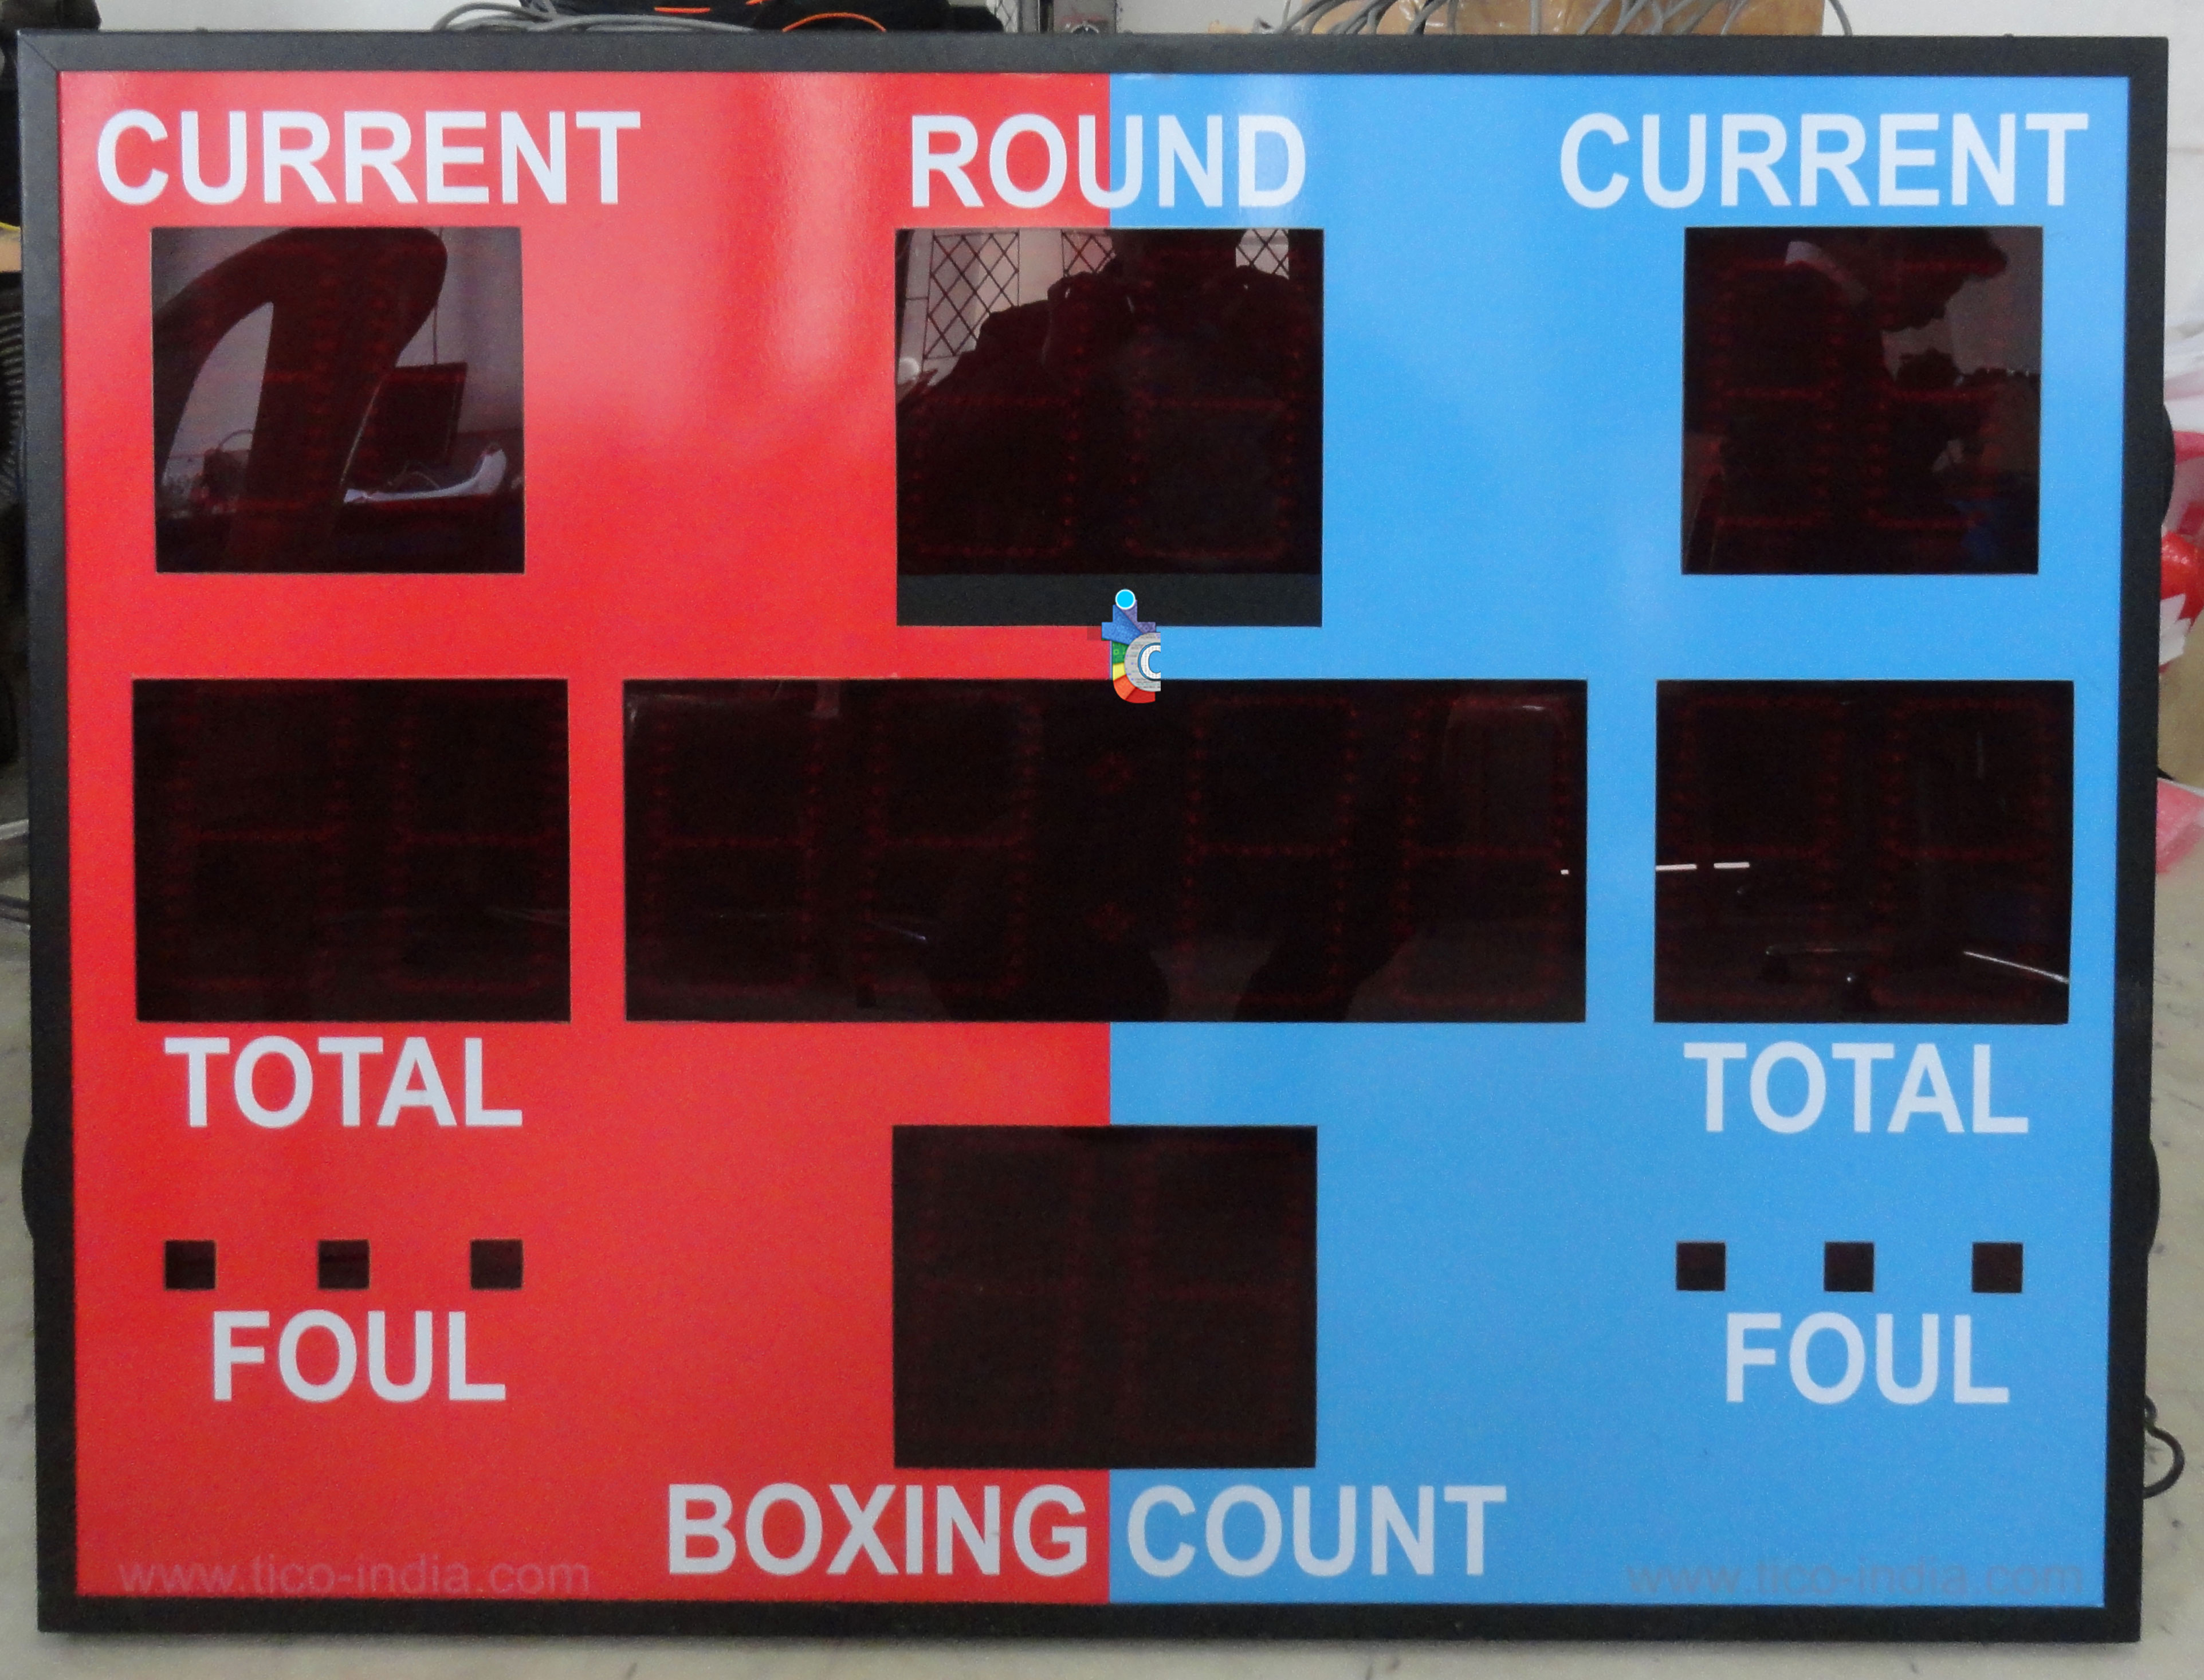 Boxing Score Board